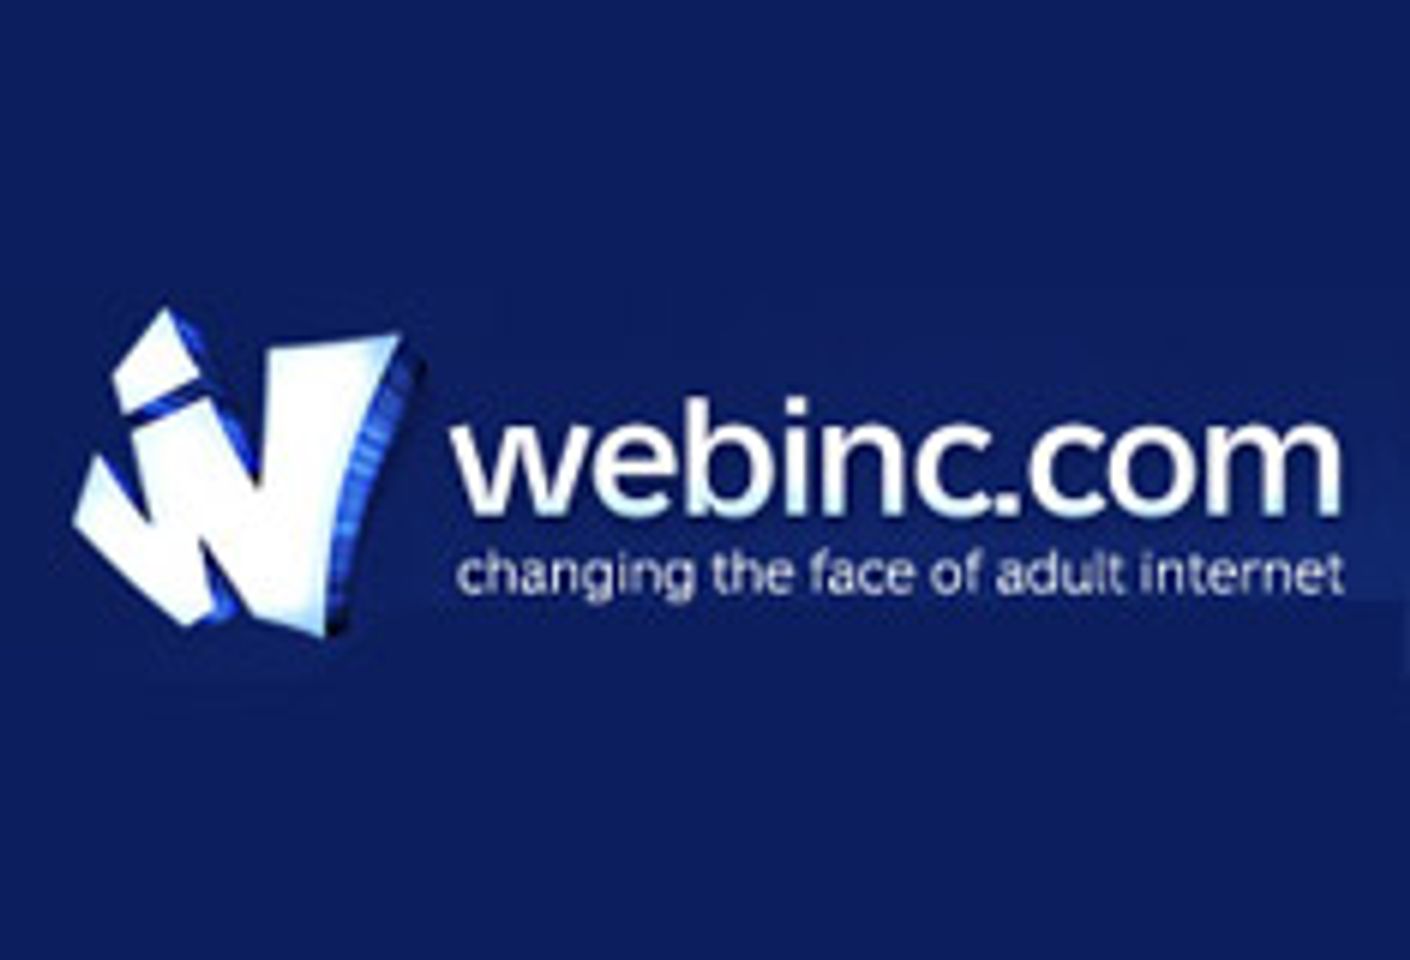 WebInc.com Redesigns Portfolio, Announces New Price Structure